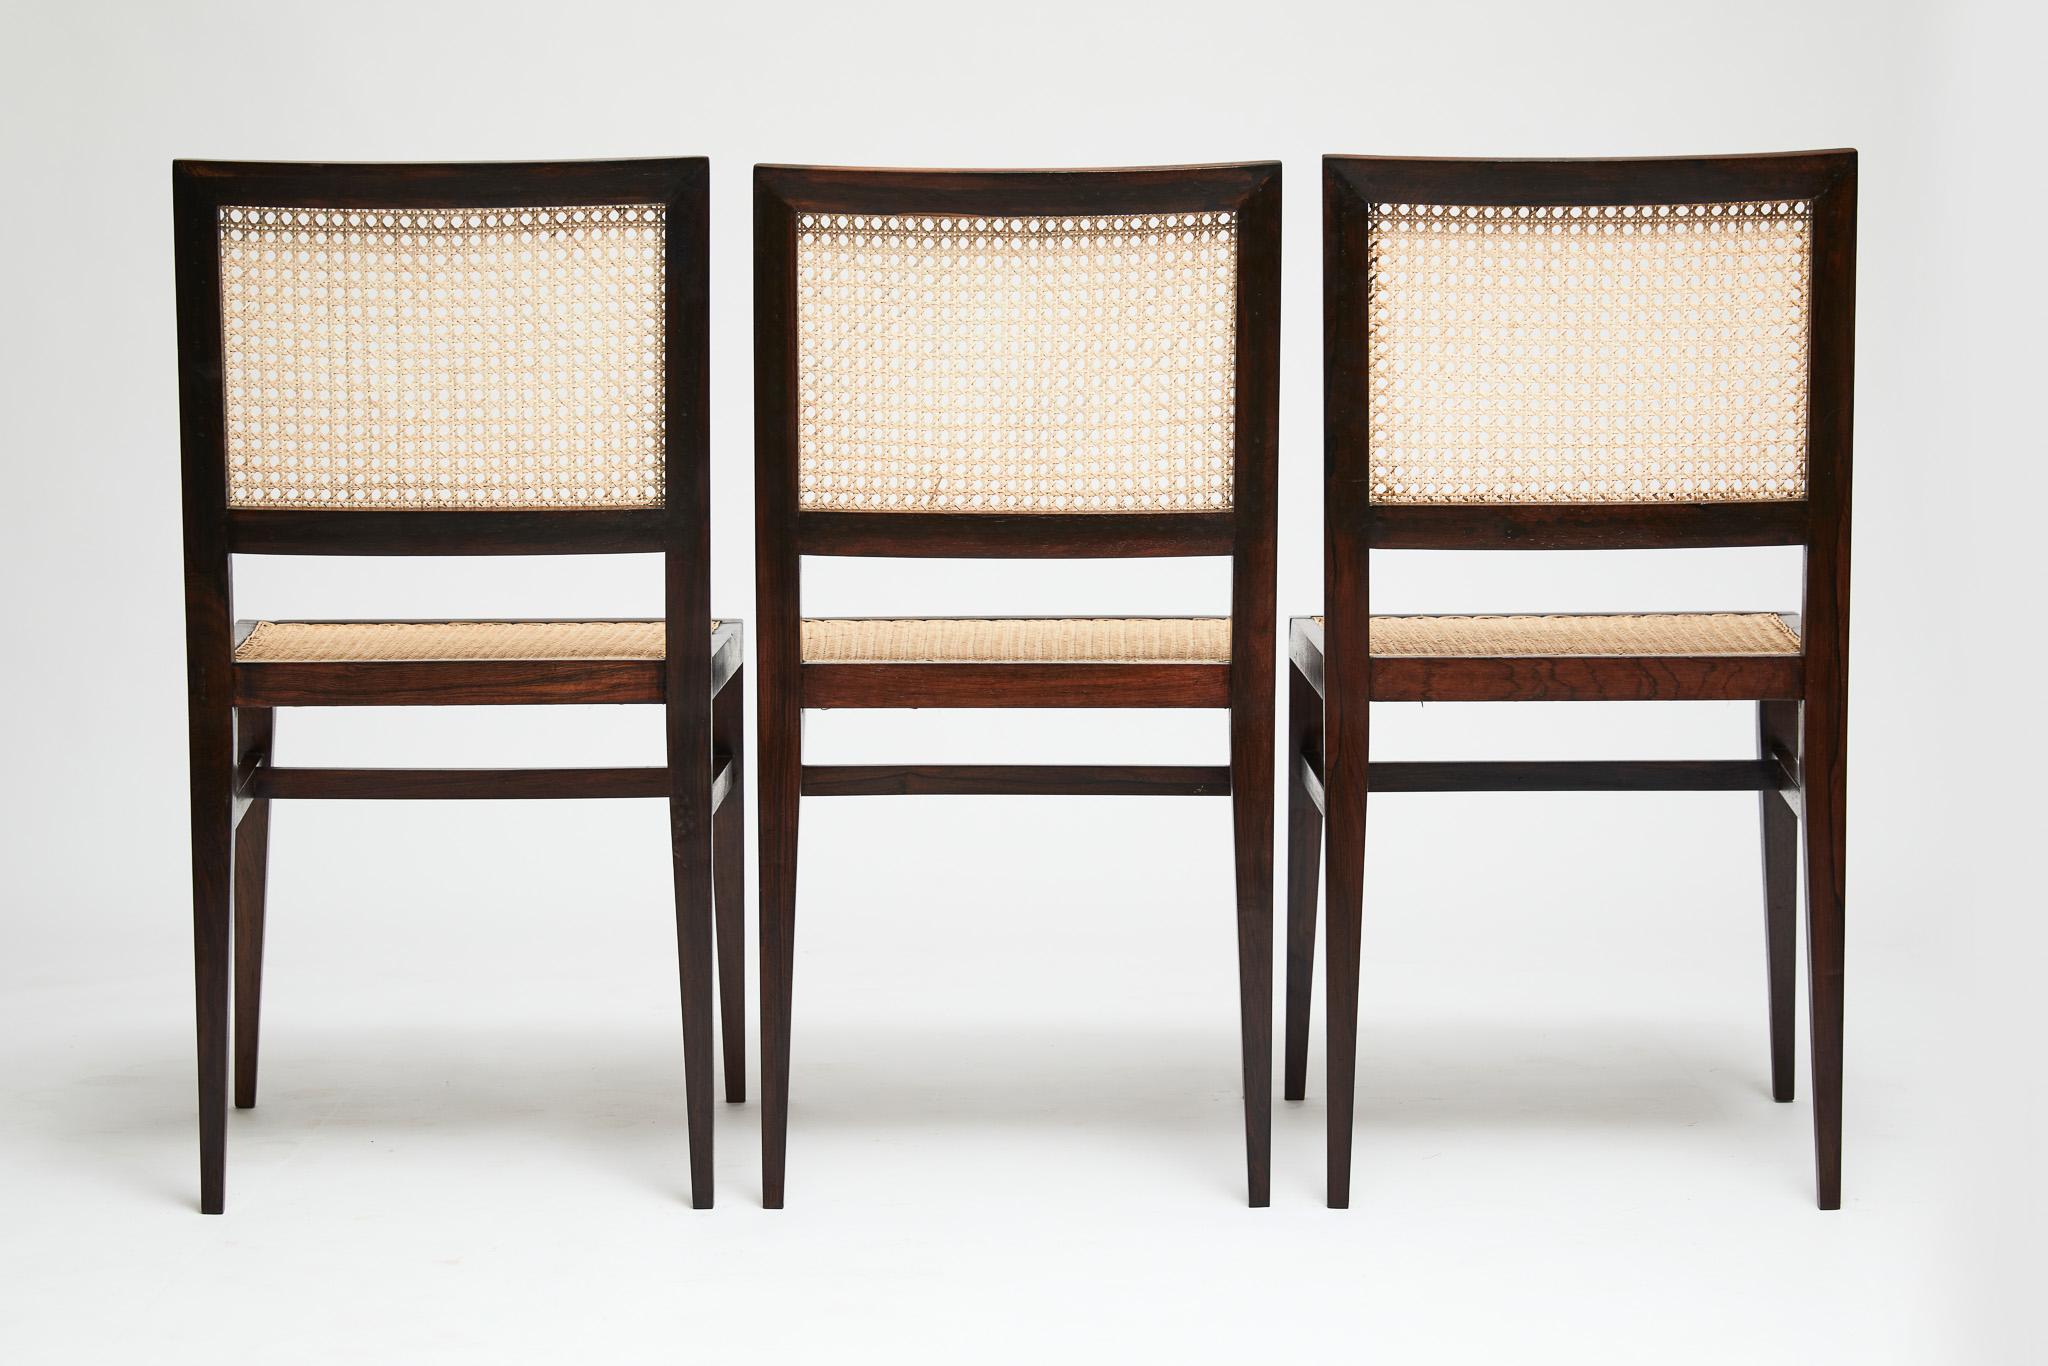 Hand-Painted Three Mid-Century Modern Hardwood & Cane Chairs by Joaquim Tenreiro, 1950 Brazil For Sale